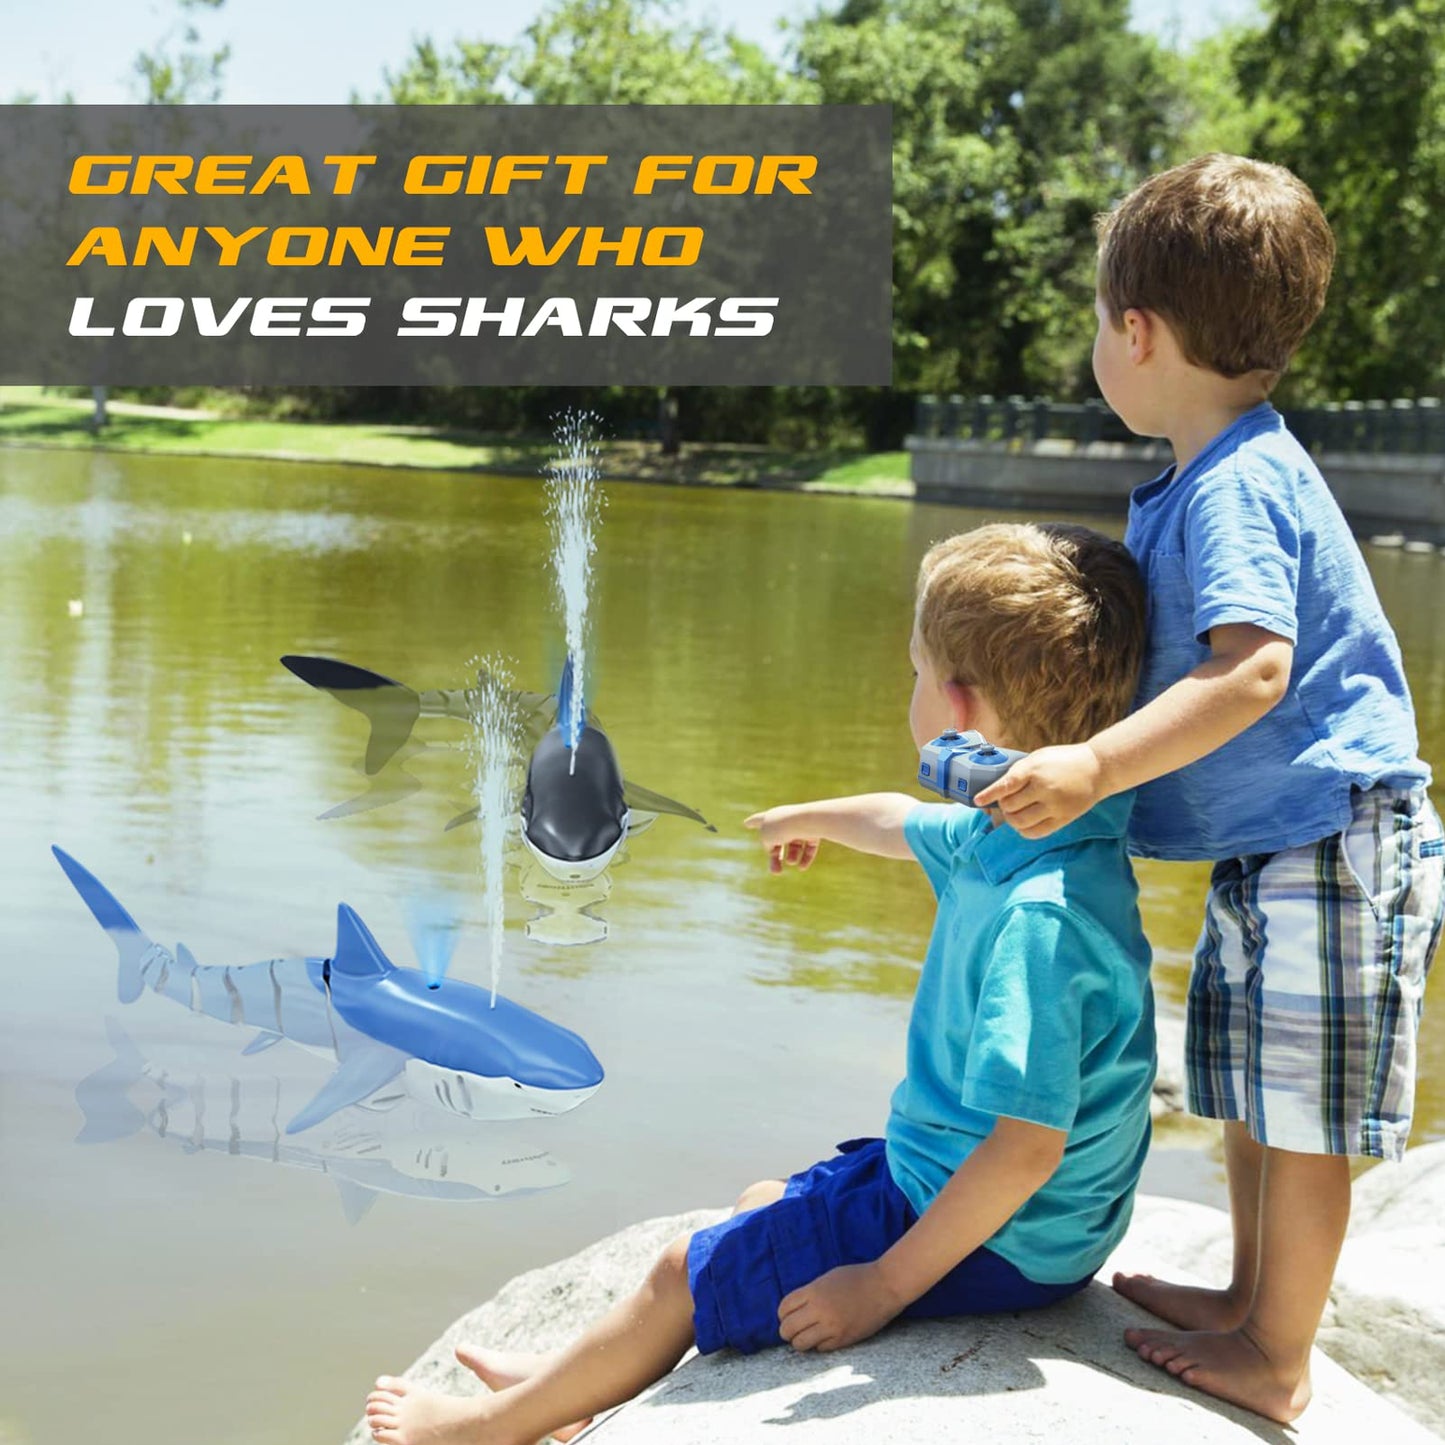 SmartShark™ Remote Controlled Shark